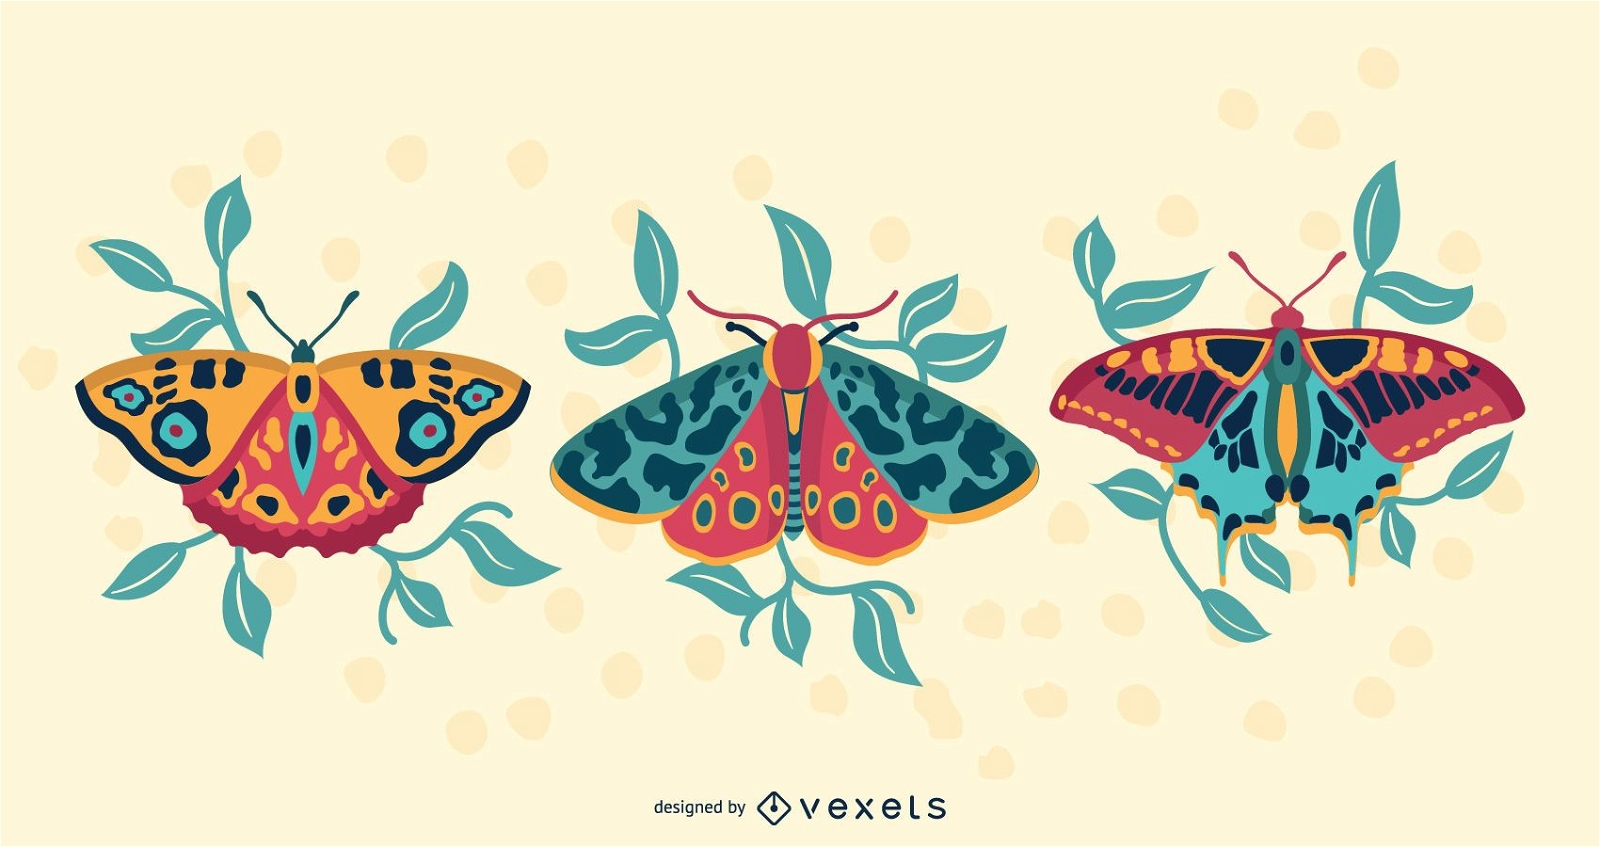 Desenho de borboletas coloridas